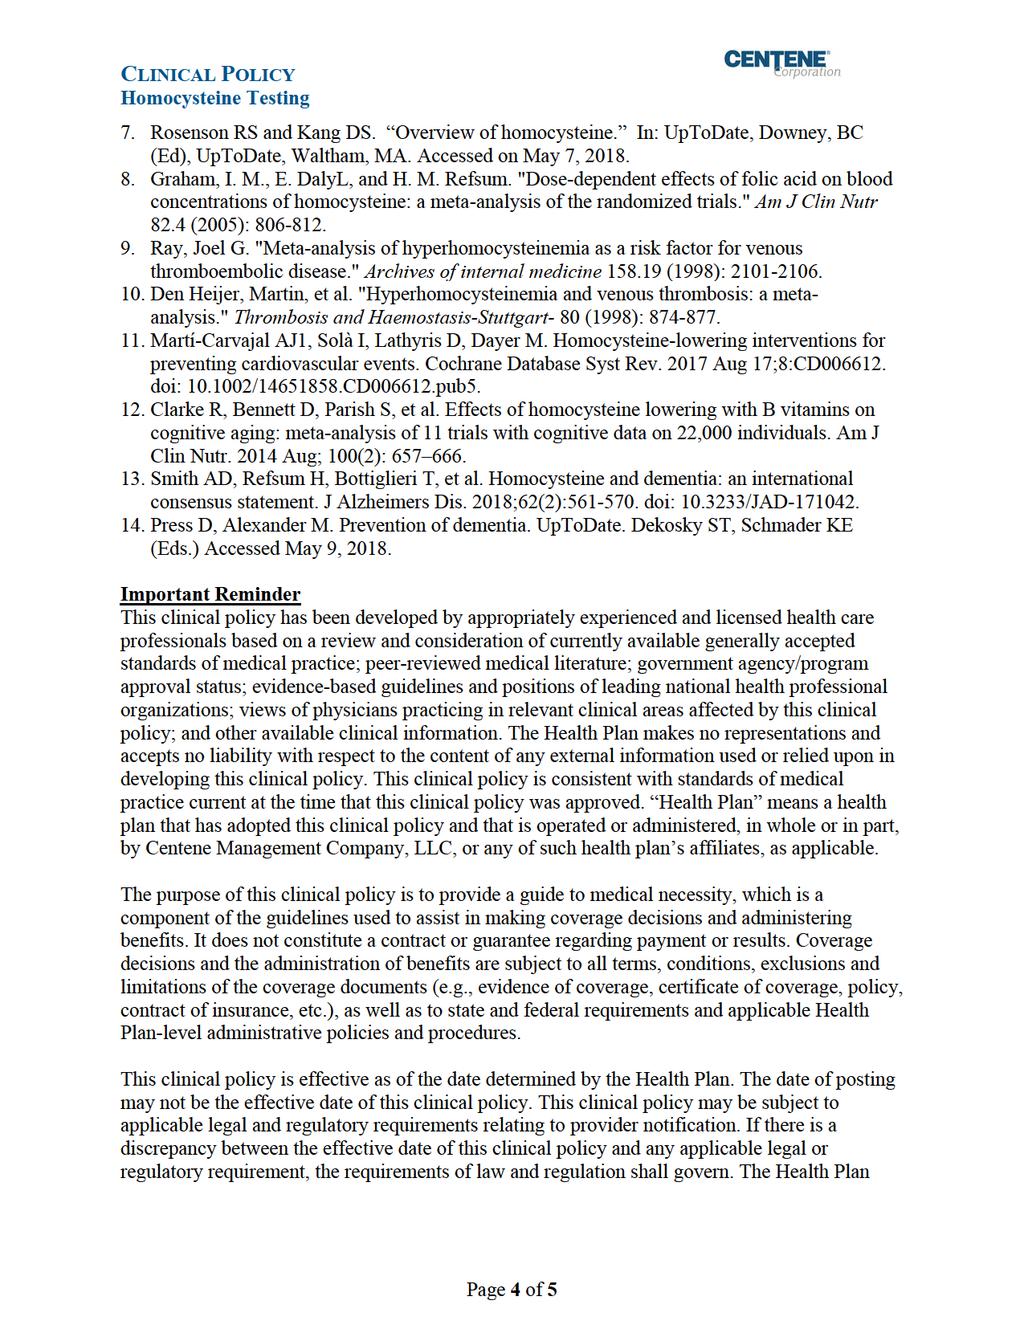 7. RosensonRSandKangDS. Overviewofhomocysteine. In:UpToDate,Downey,BC (Ed),UpToDate, Waltham, MA.Accesedon May7,2018. 8. Graham,I. M.,E.DalyL,andH. M.Refsum.